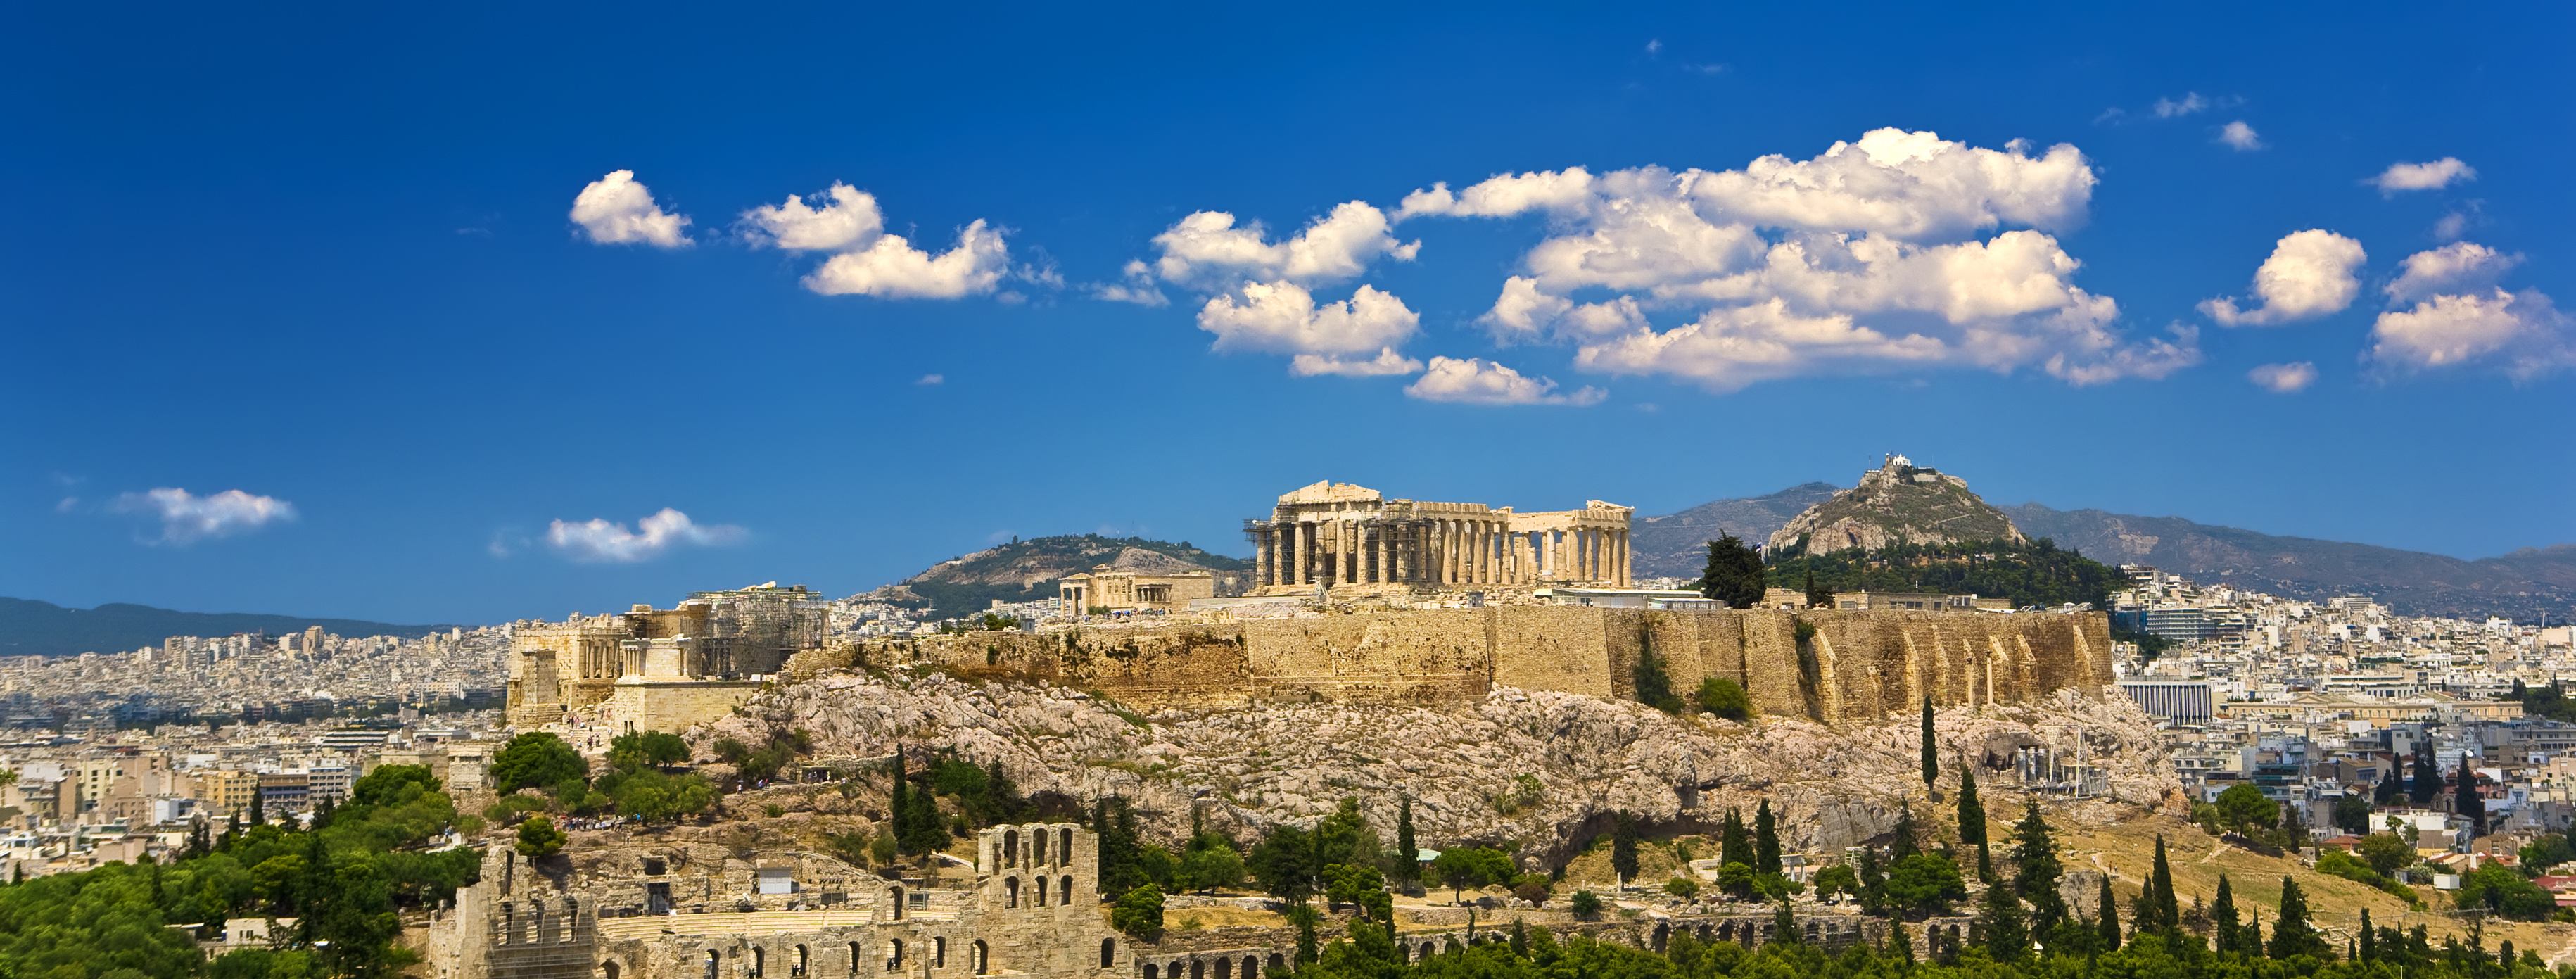 Greece Image 2